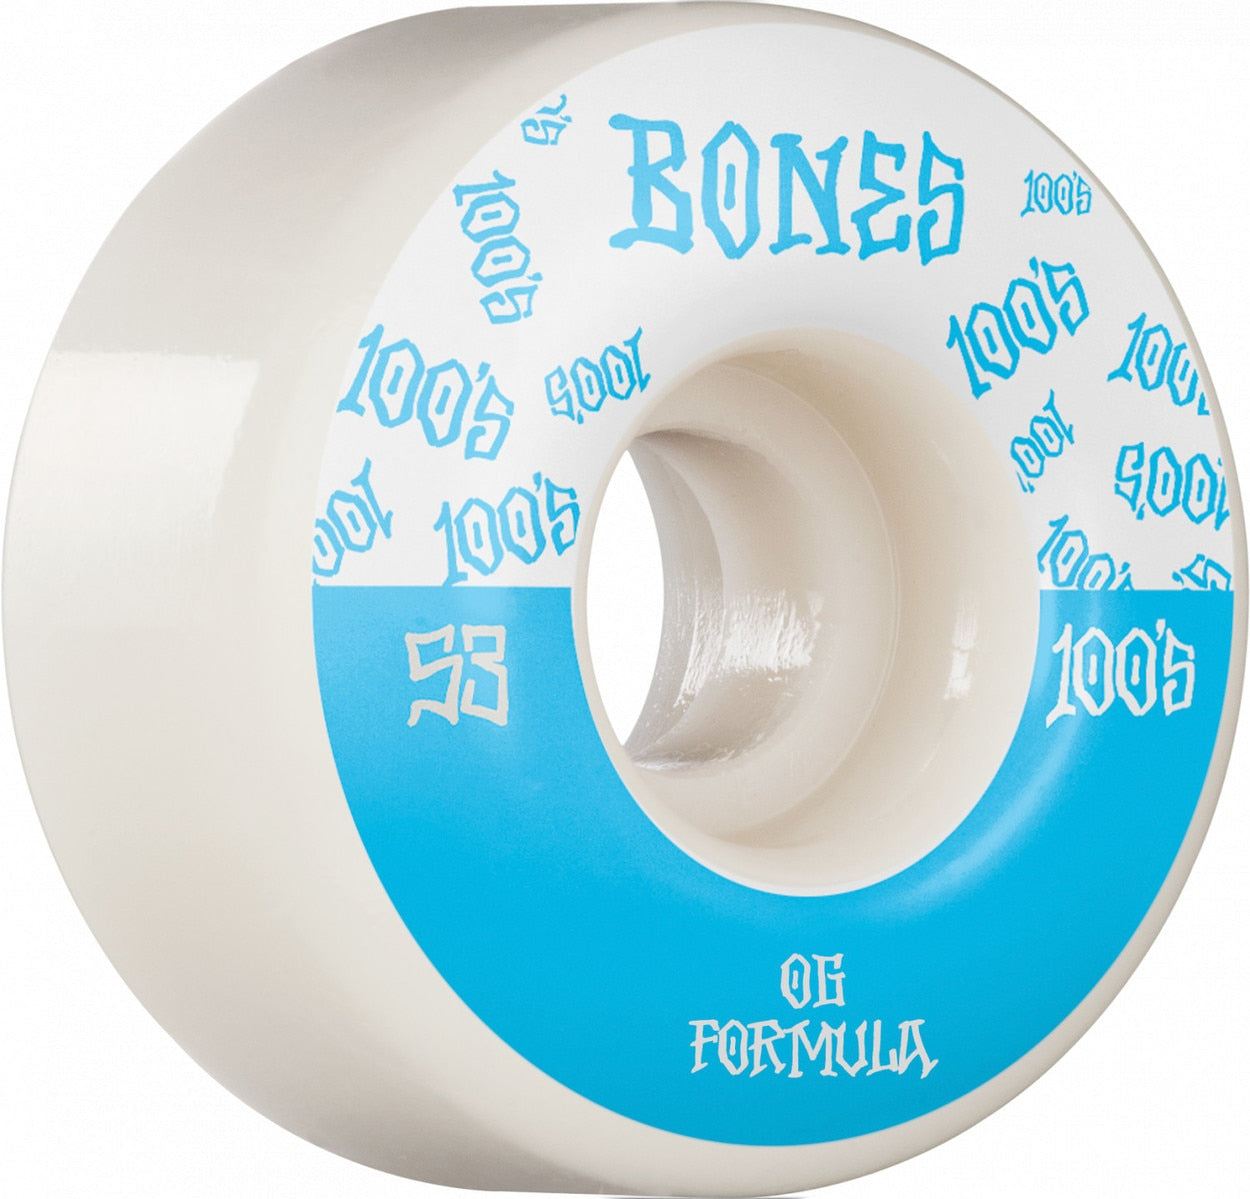 Bones 100s V4 Wide OG Formula Skateboard Wheels -White/Blue